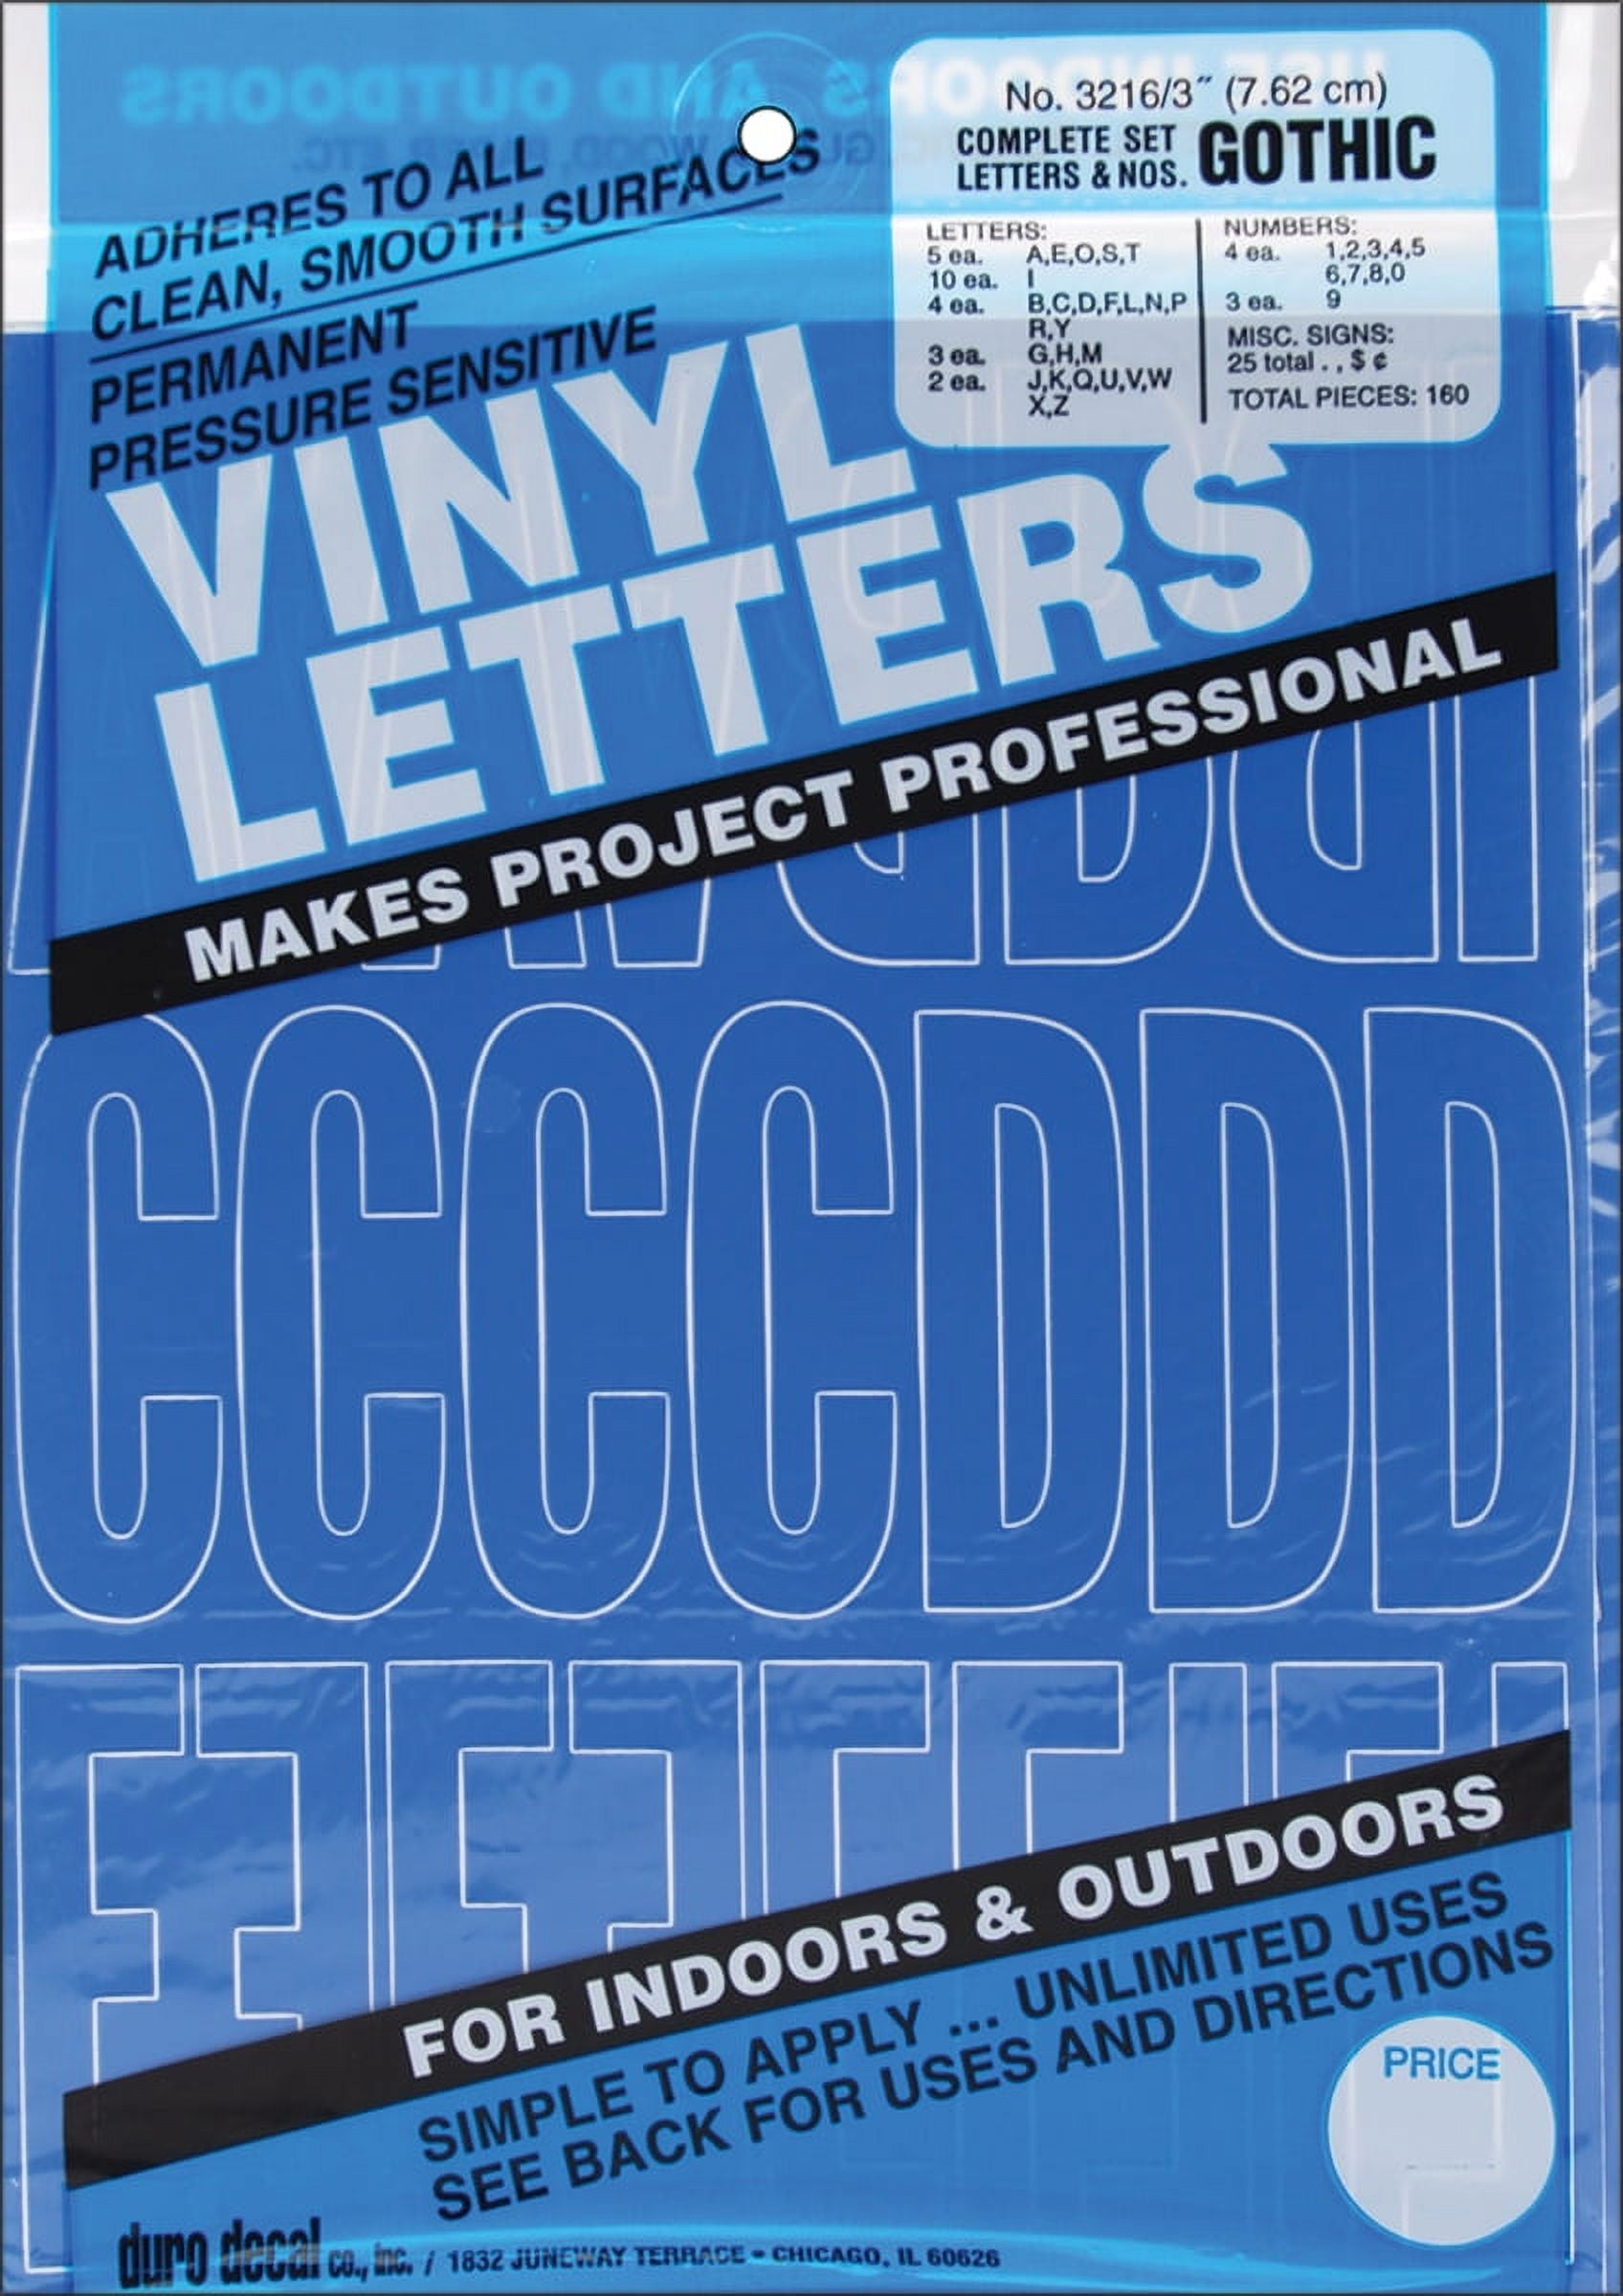 Permanent Adhesive Vinyl Letters 4 95/Pkg-White, 1 count - Harris Teeter